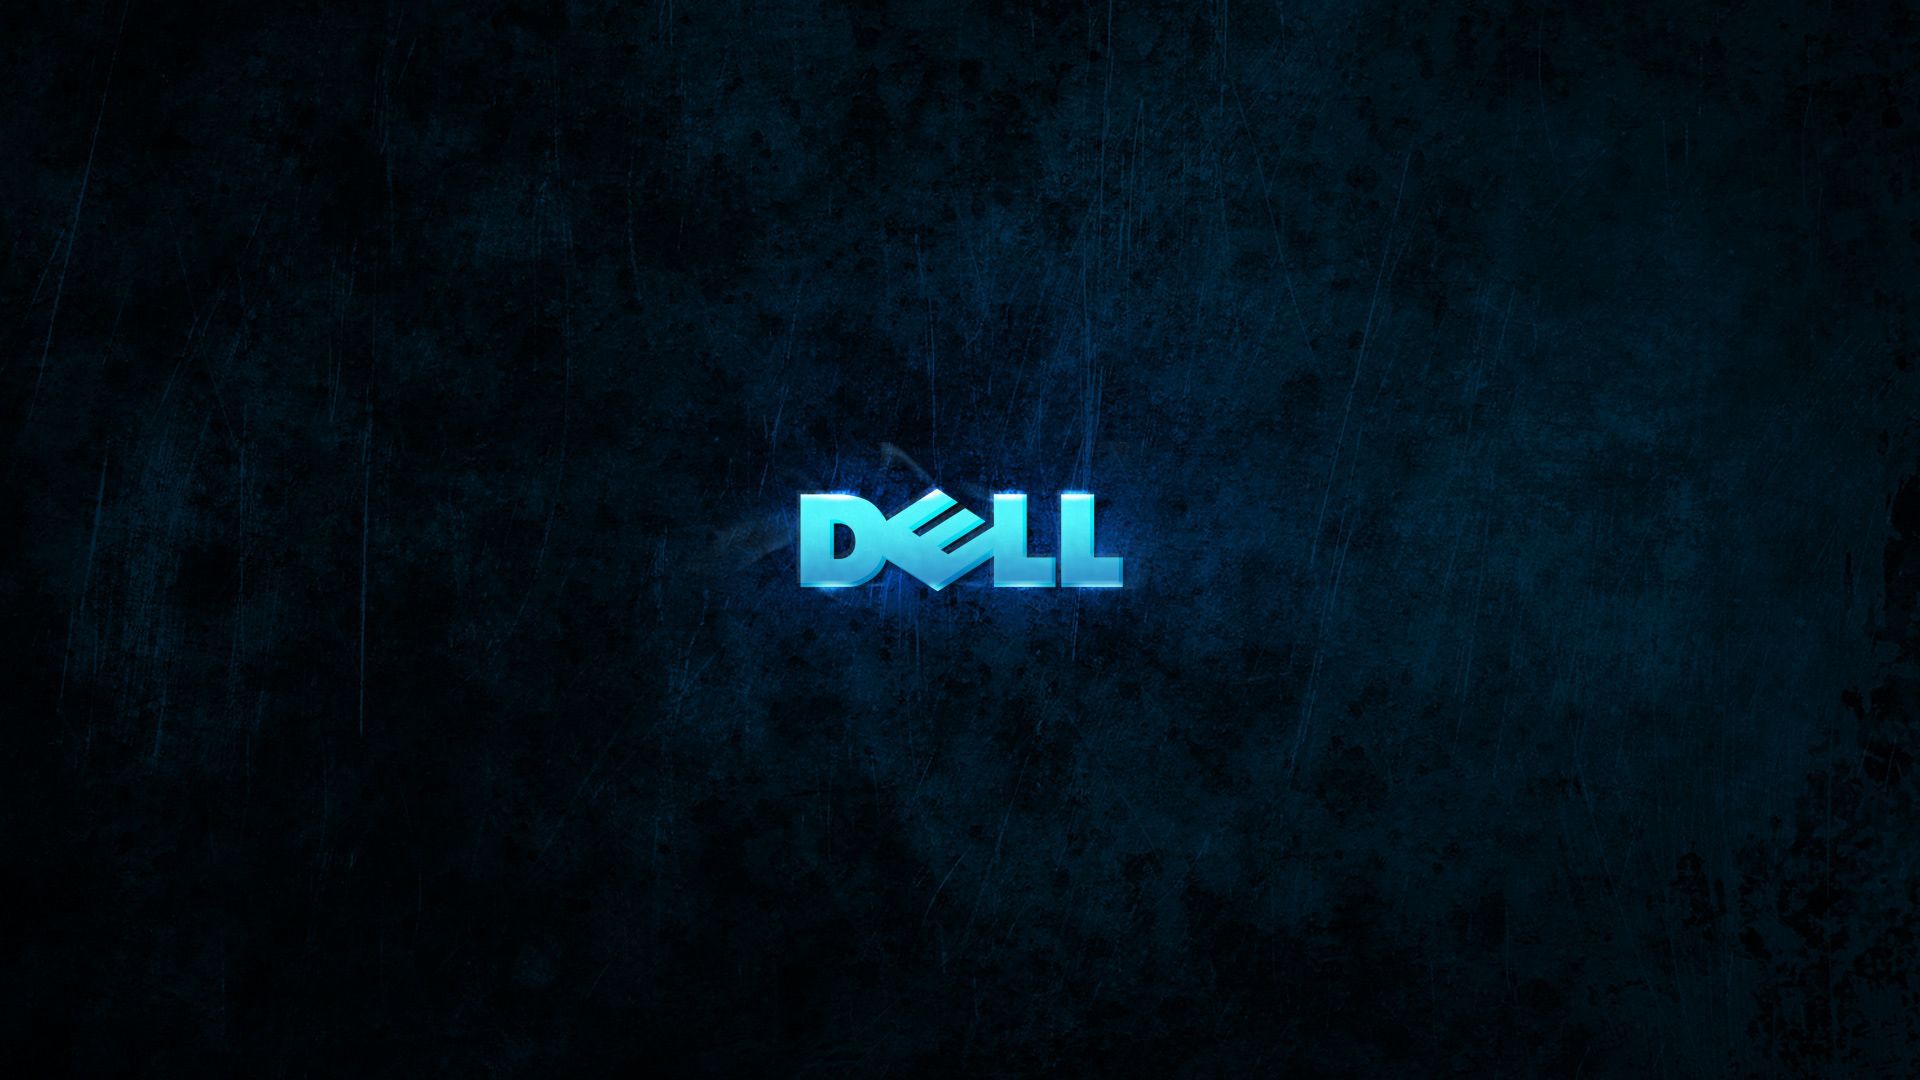 Dell 4k Desktop Wallpaper Top Background